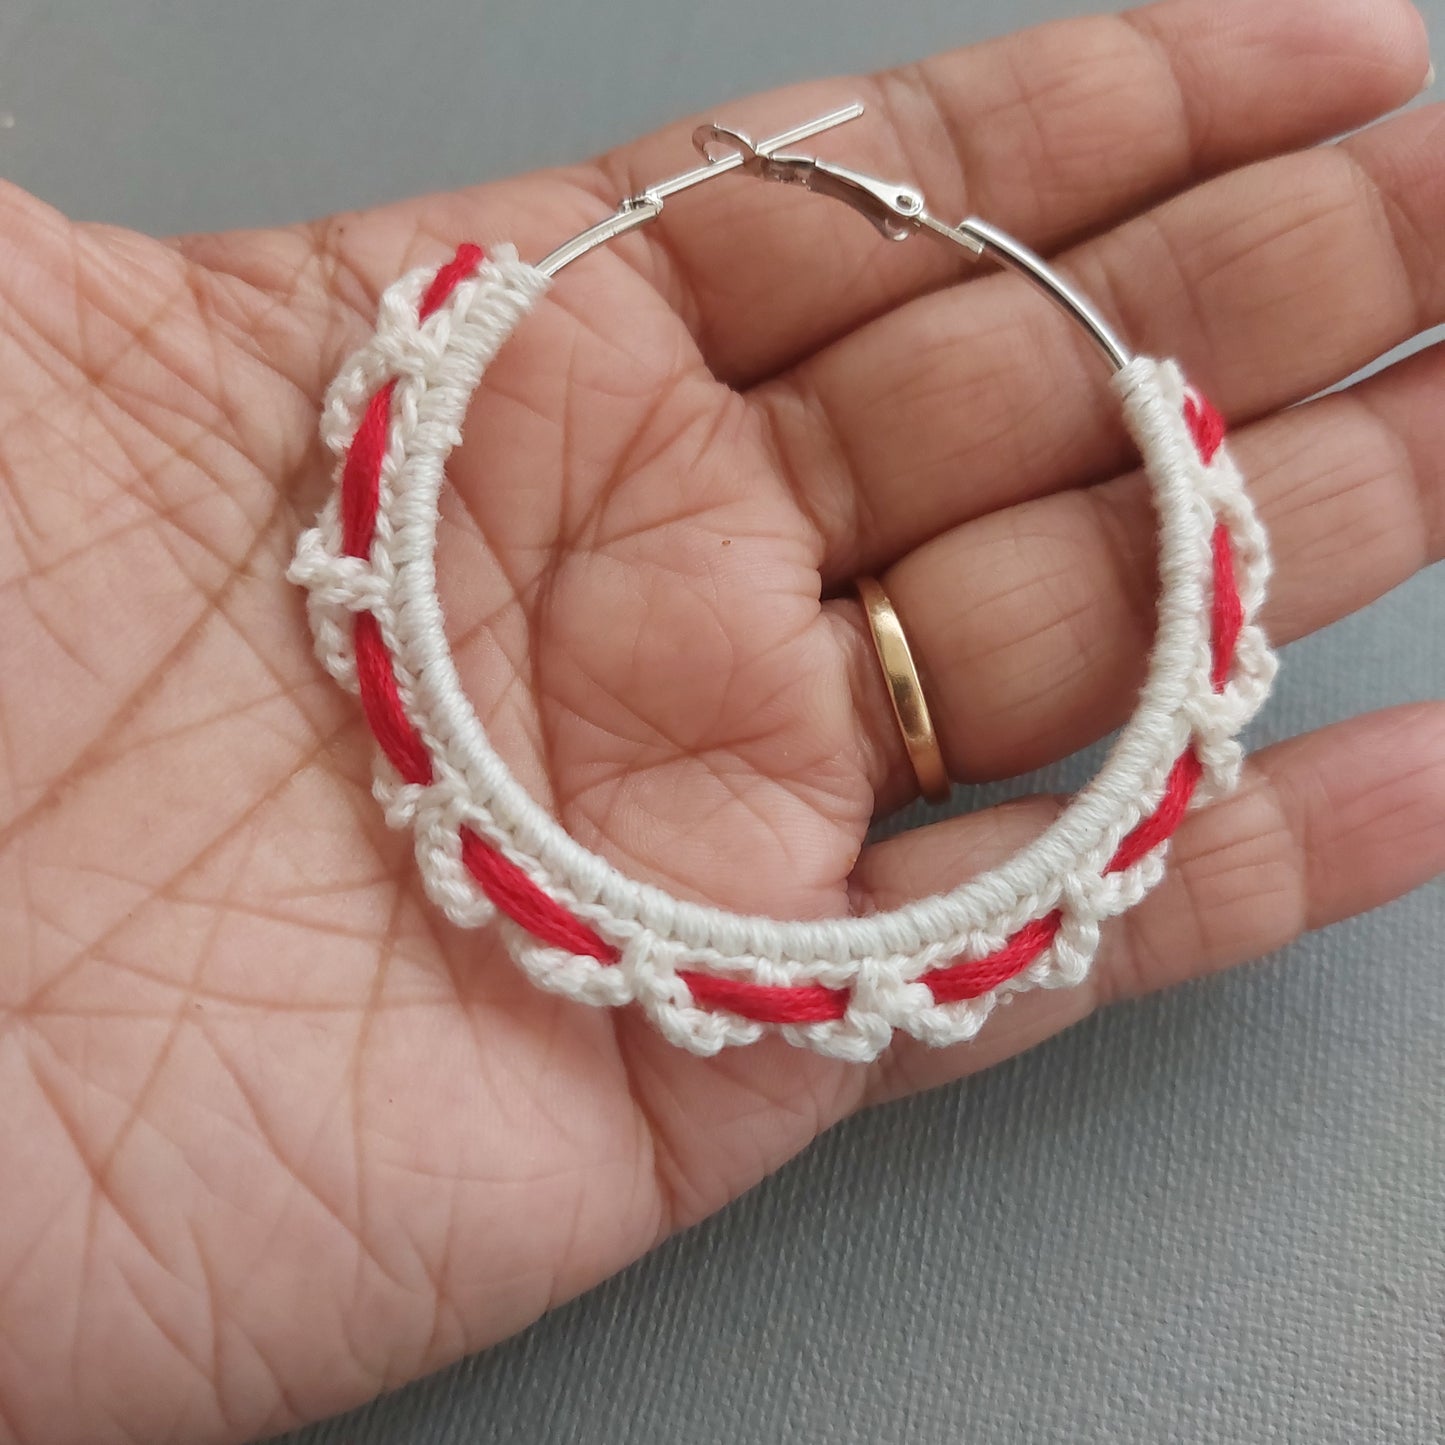 Handwoven Red and White Crochet Earrings